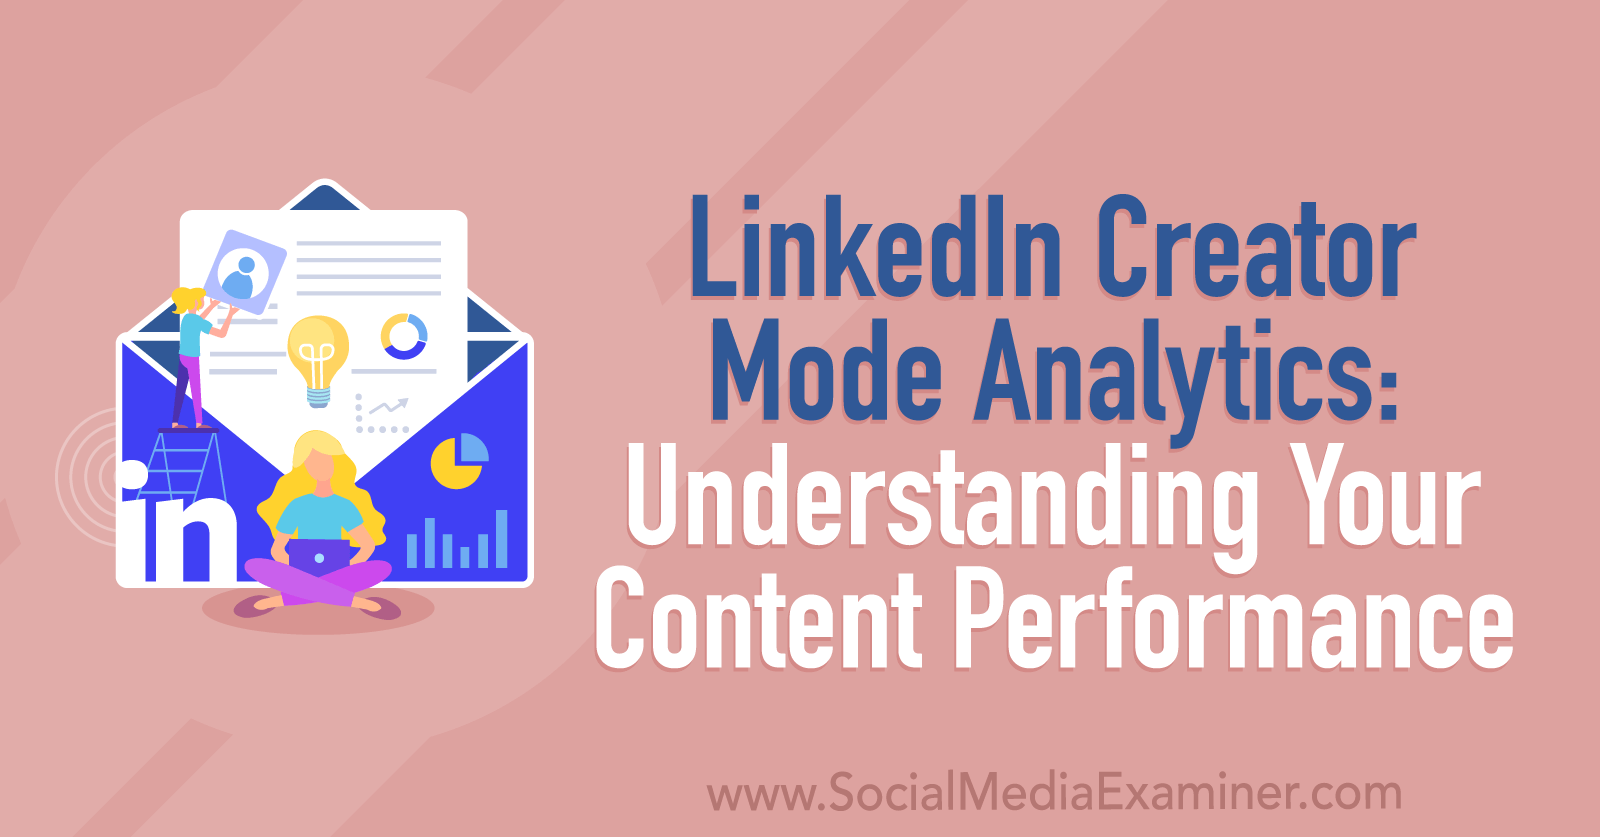 LinkedIn Creator Mode Analytics: Understanding Your Content Performance by Social Media Examiner